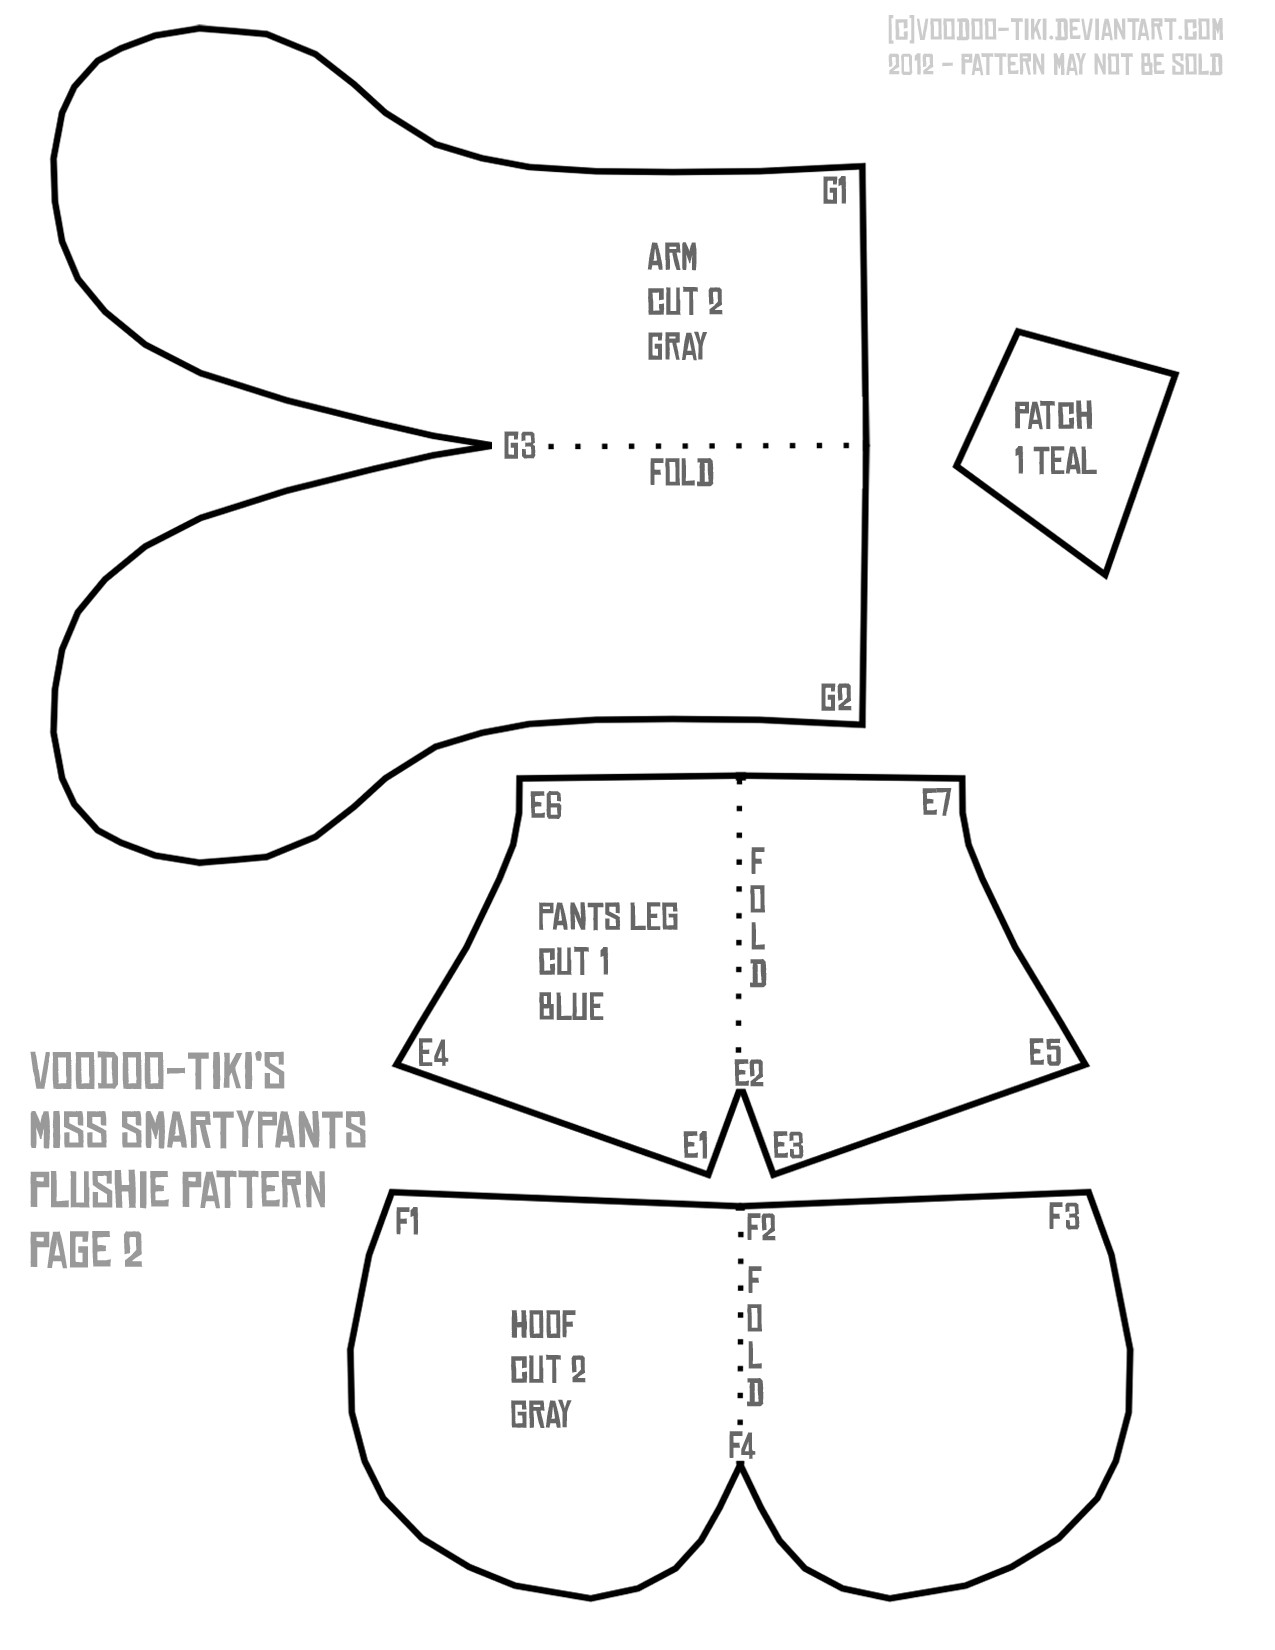 Miss Smartypants pattern 2 by Voodoo Tiki on DeviantArt